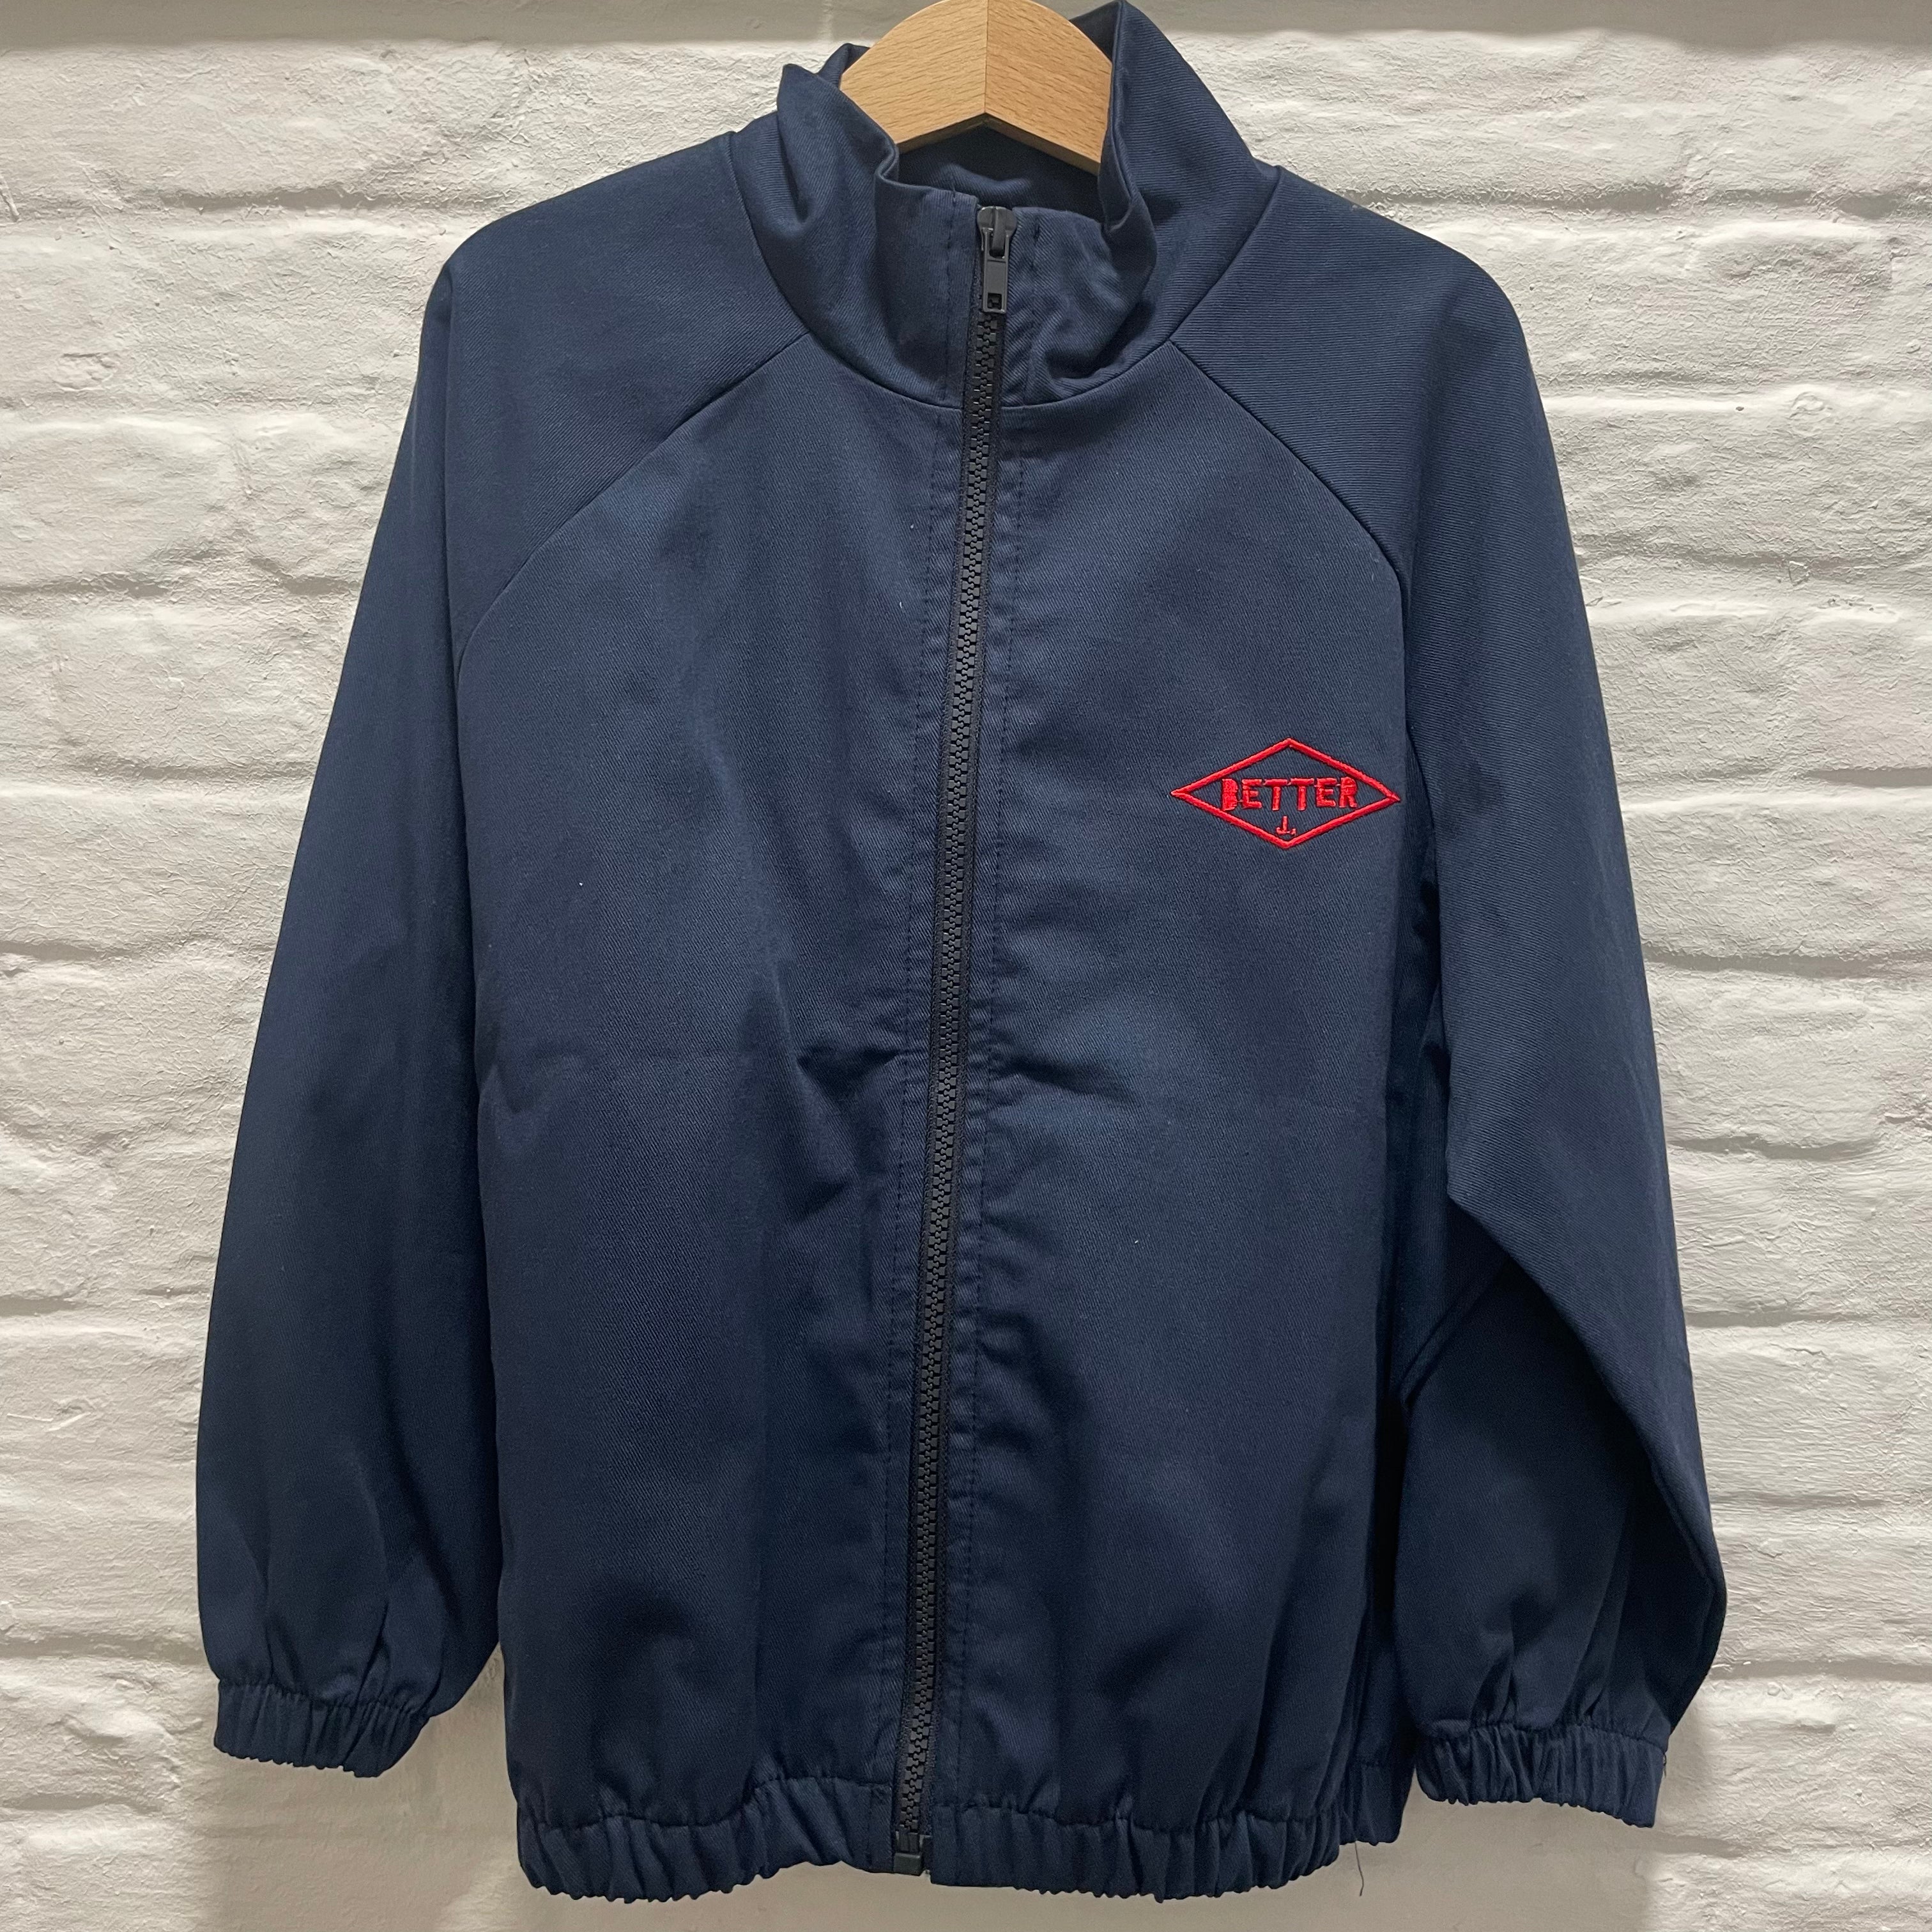 Hygge Selection - better jacket - navy